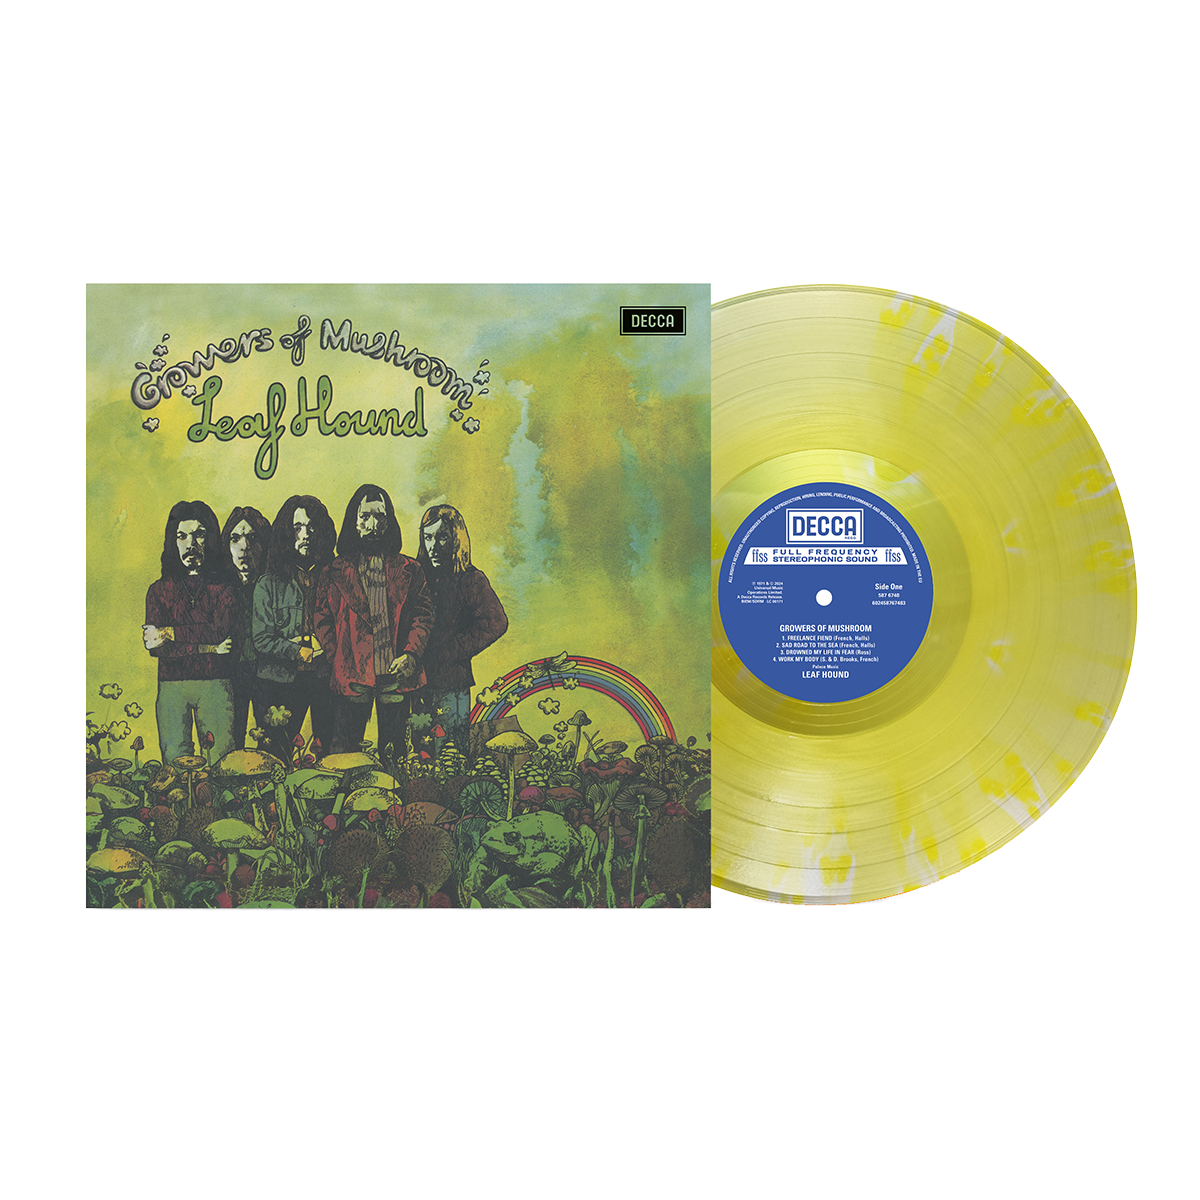 Leaf Hound - Growers Of Mushroom: Yellow Splatter Vinyl LP [RSD24]